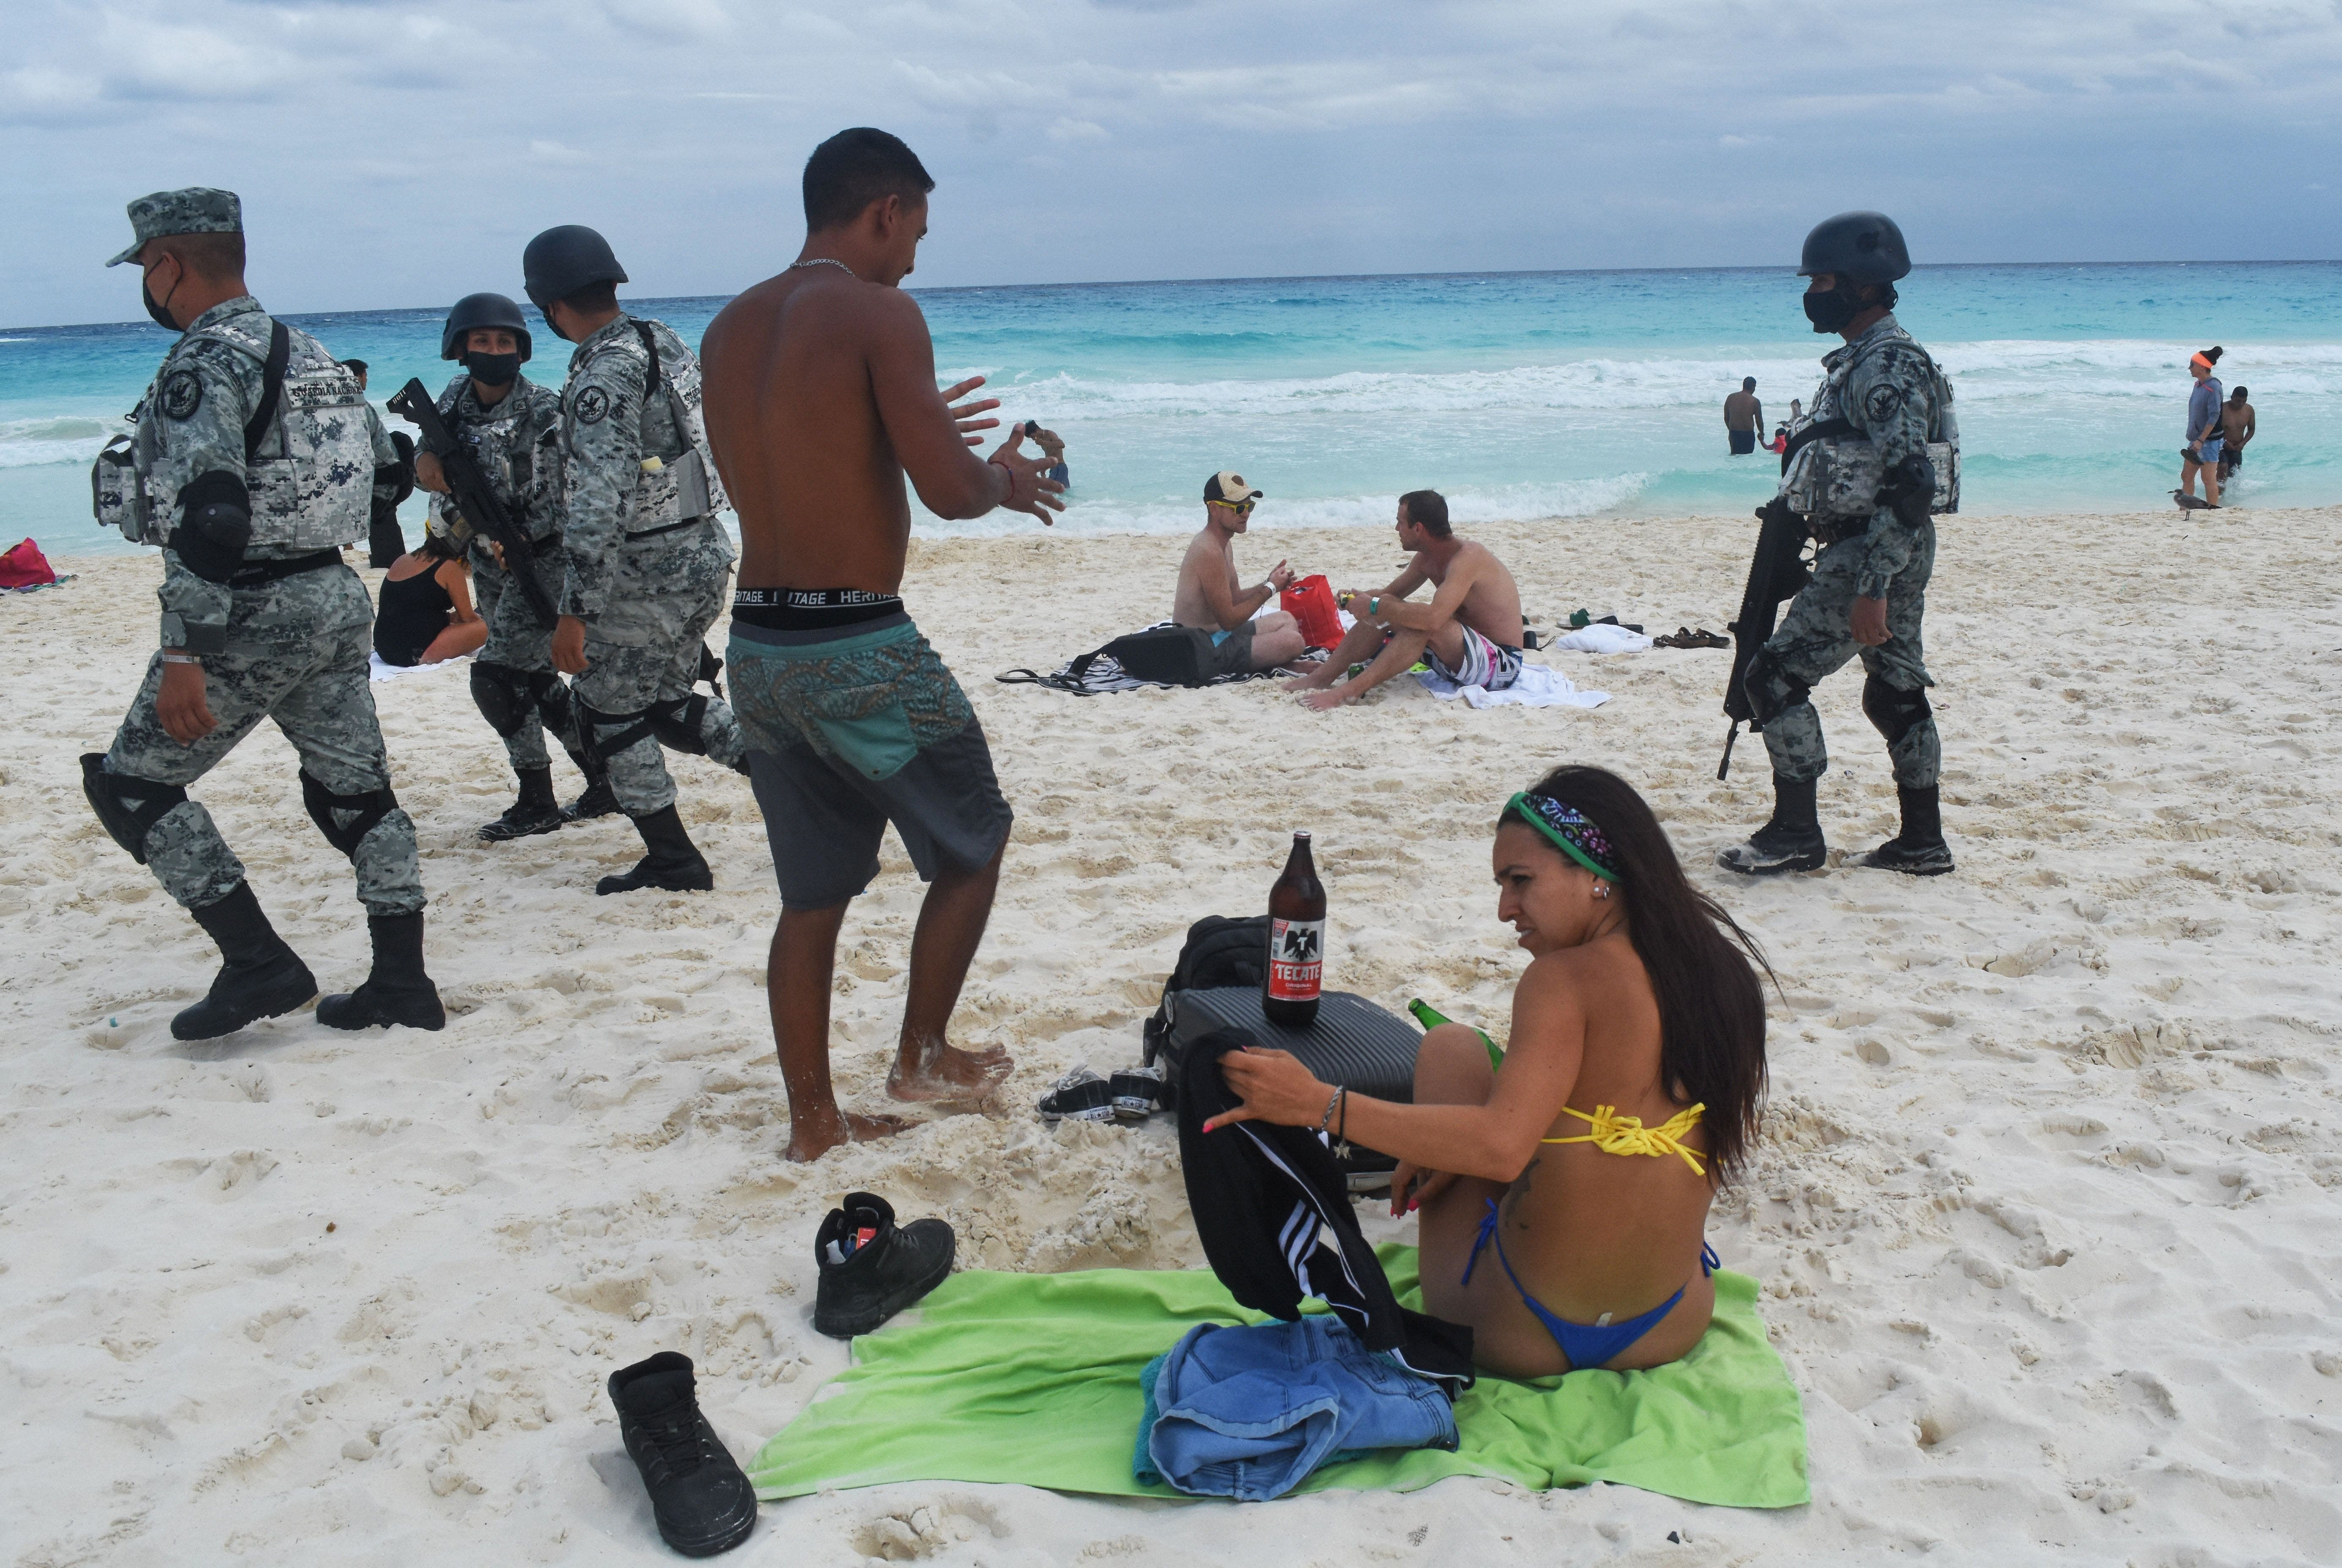 Alleged machete assault on American in Cancun highlights vacationer